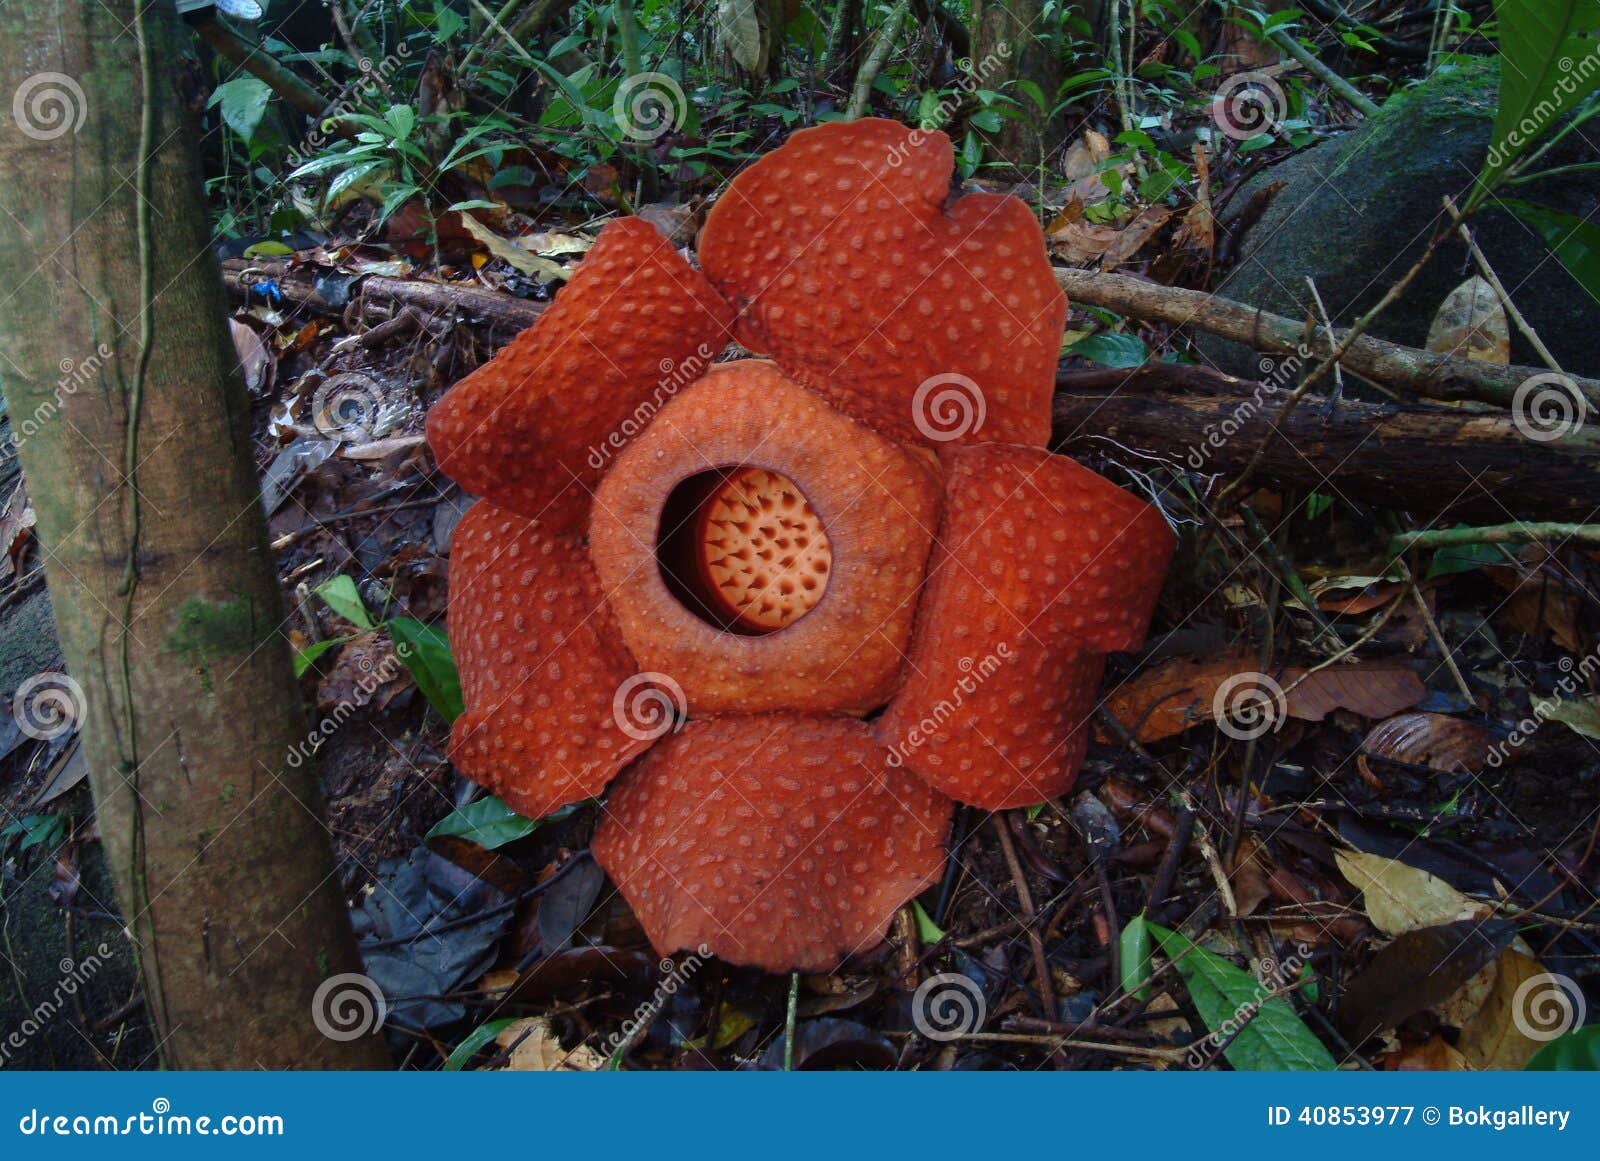 world's largest flower, rafflesia tuanmudae, gunung gading national park, sarawak, malaysia